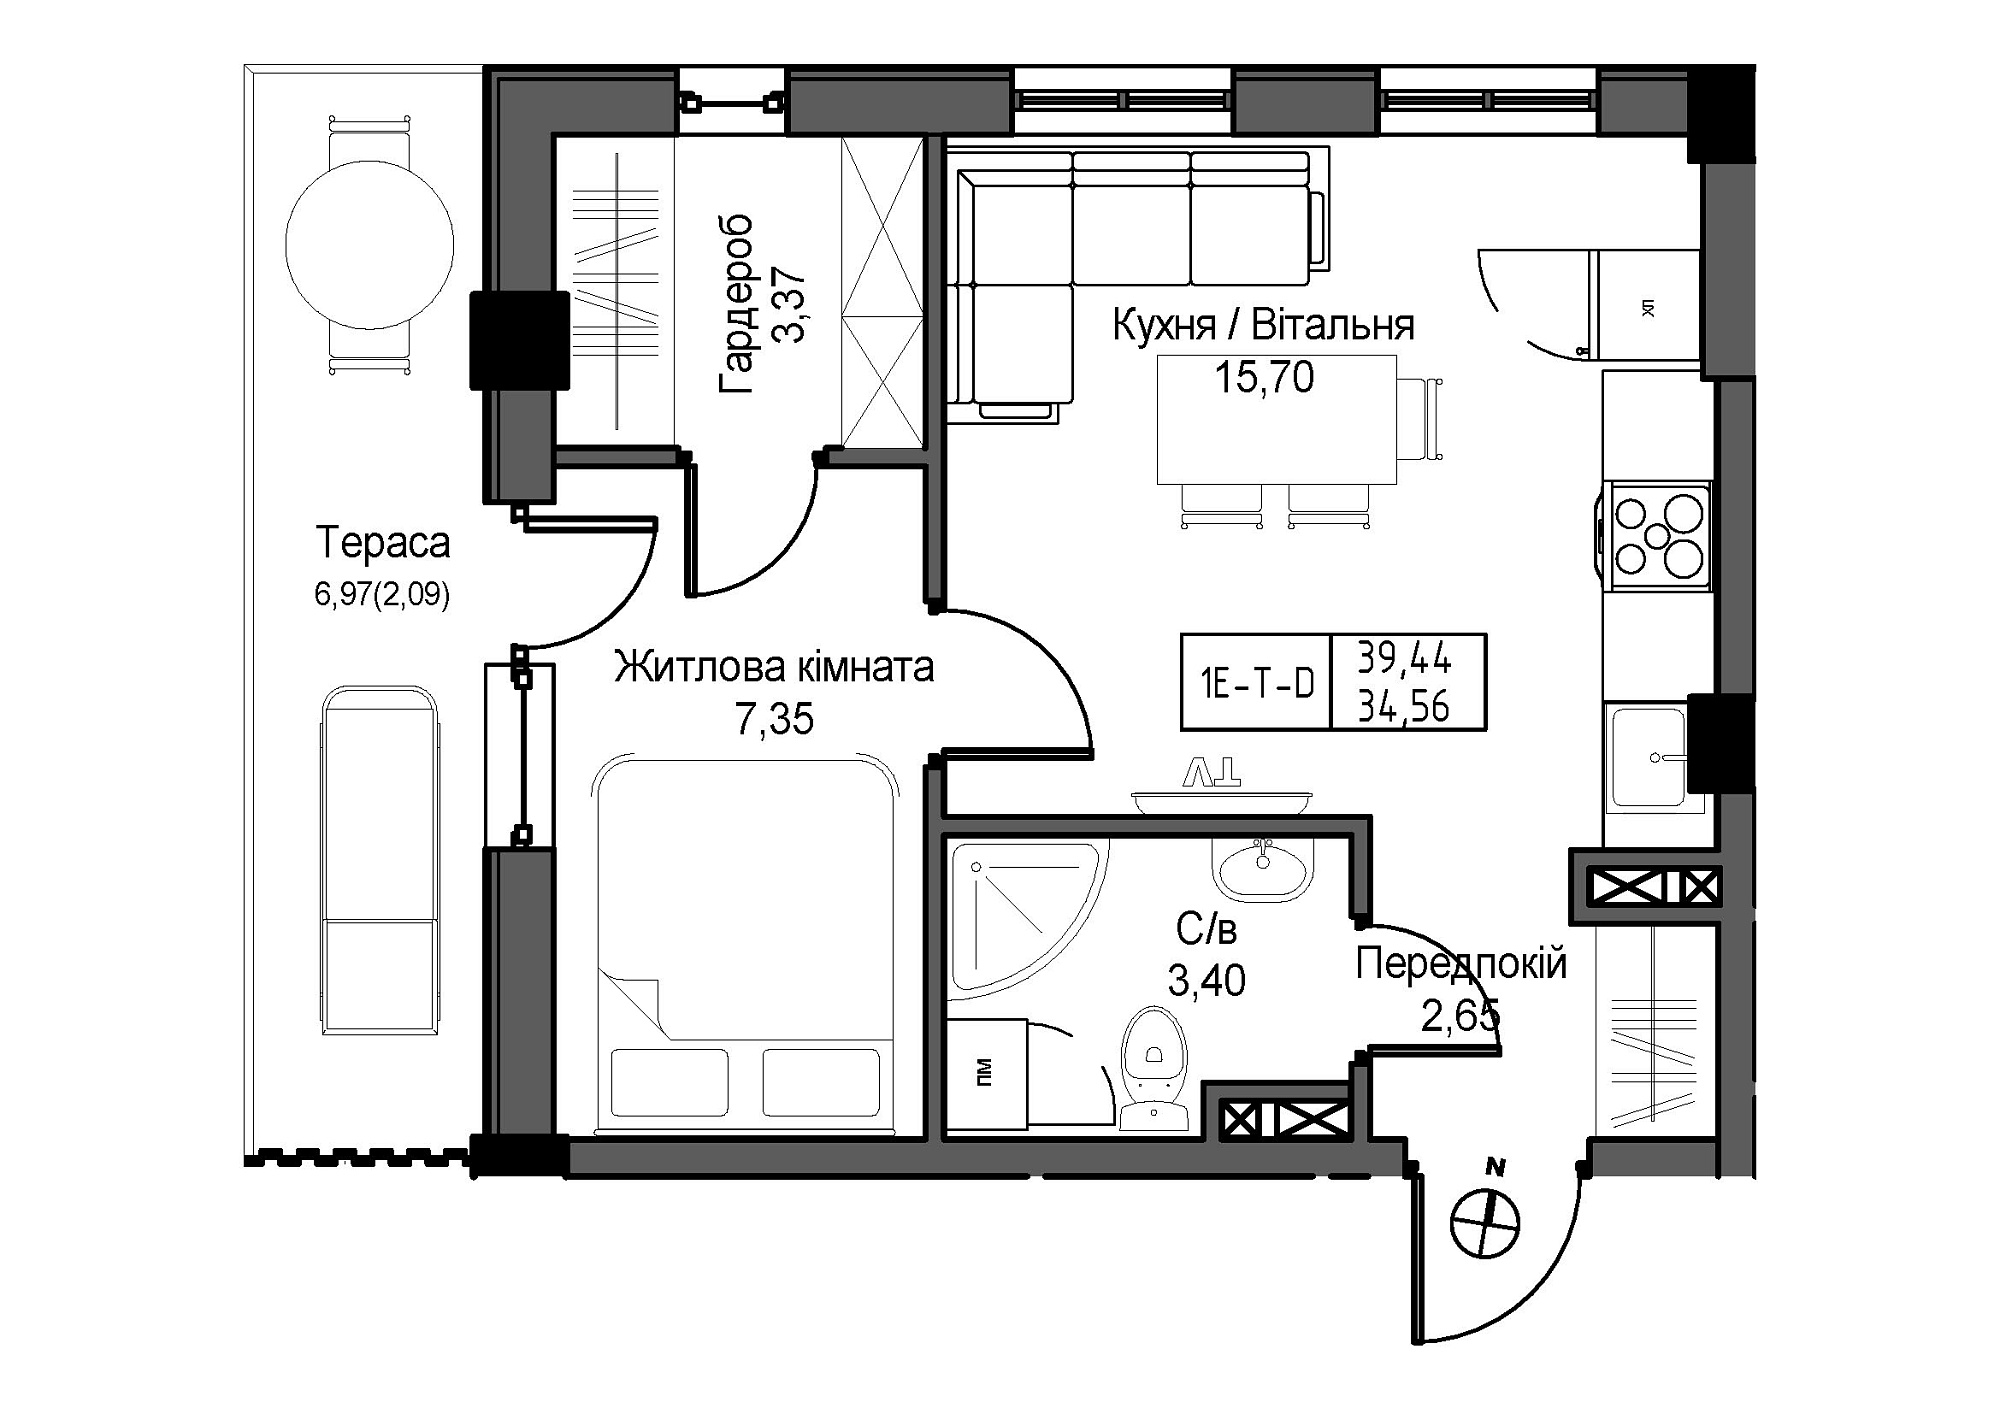 Планування 1-к квартира площею 34.56м2, UM-007-07/0002.